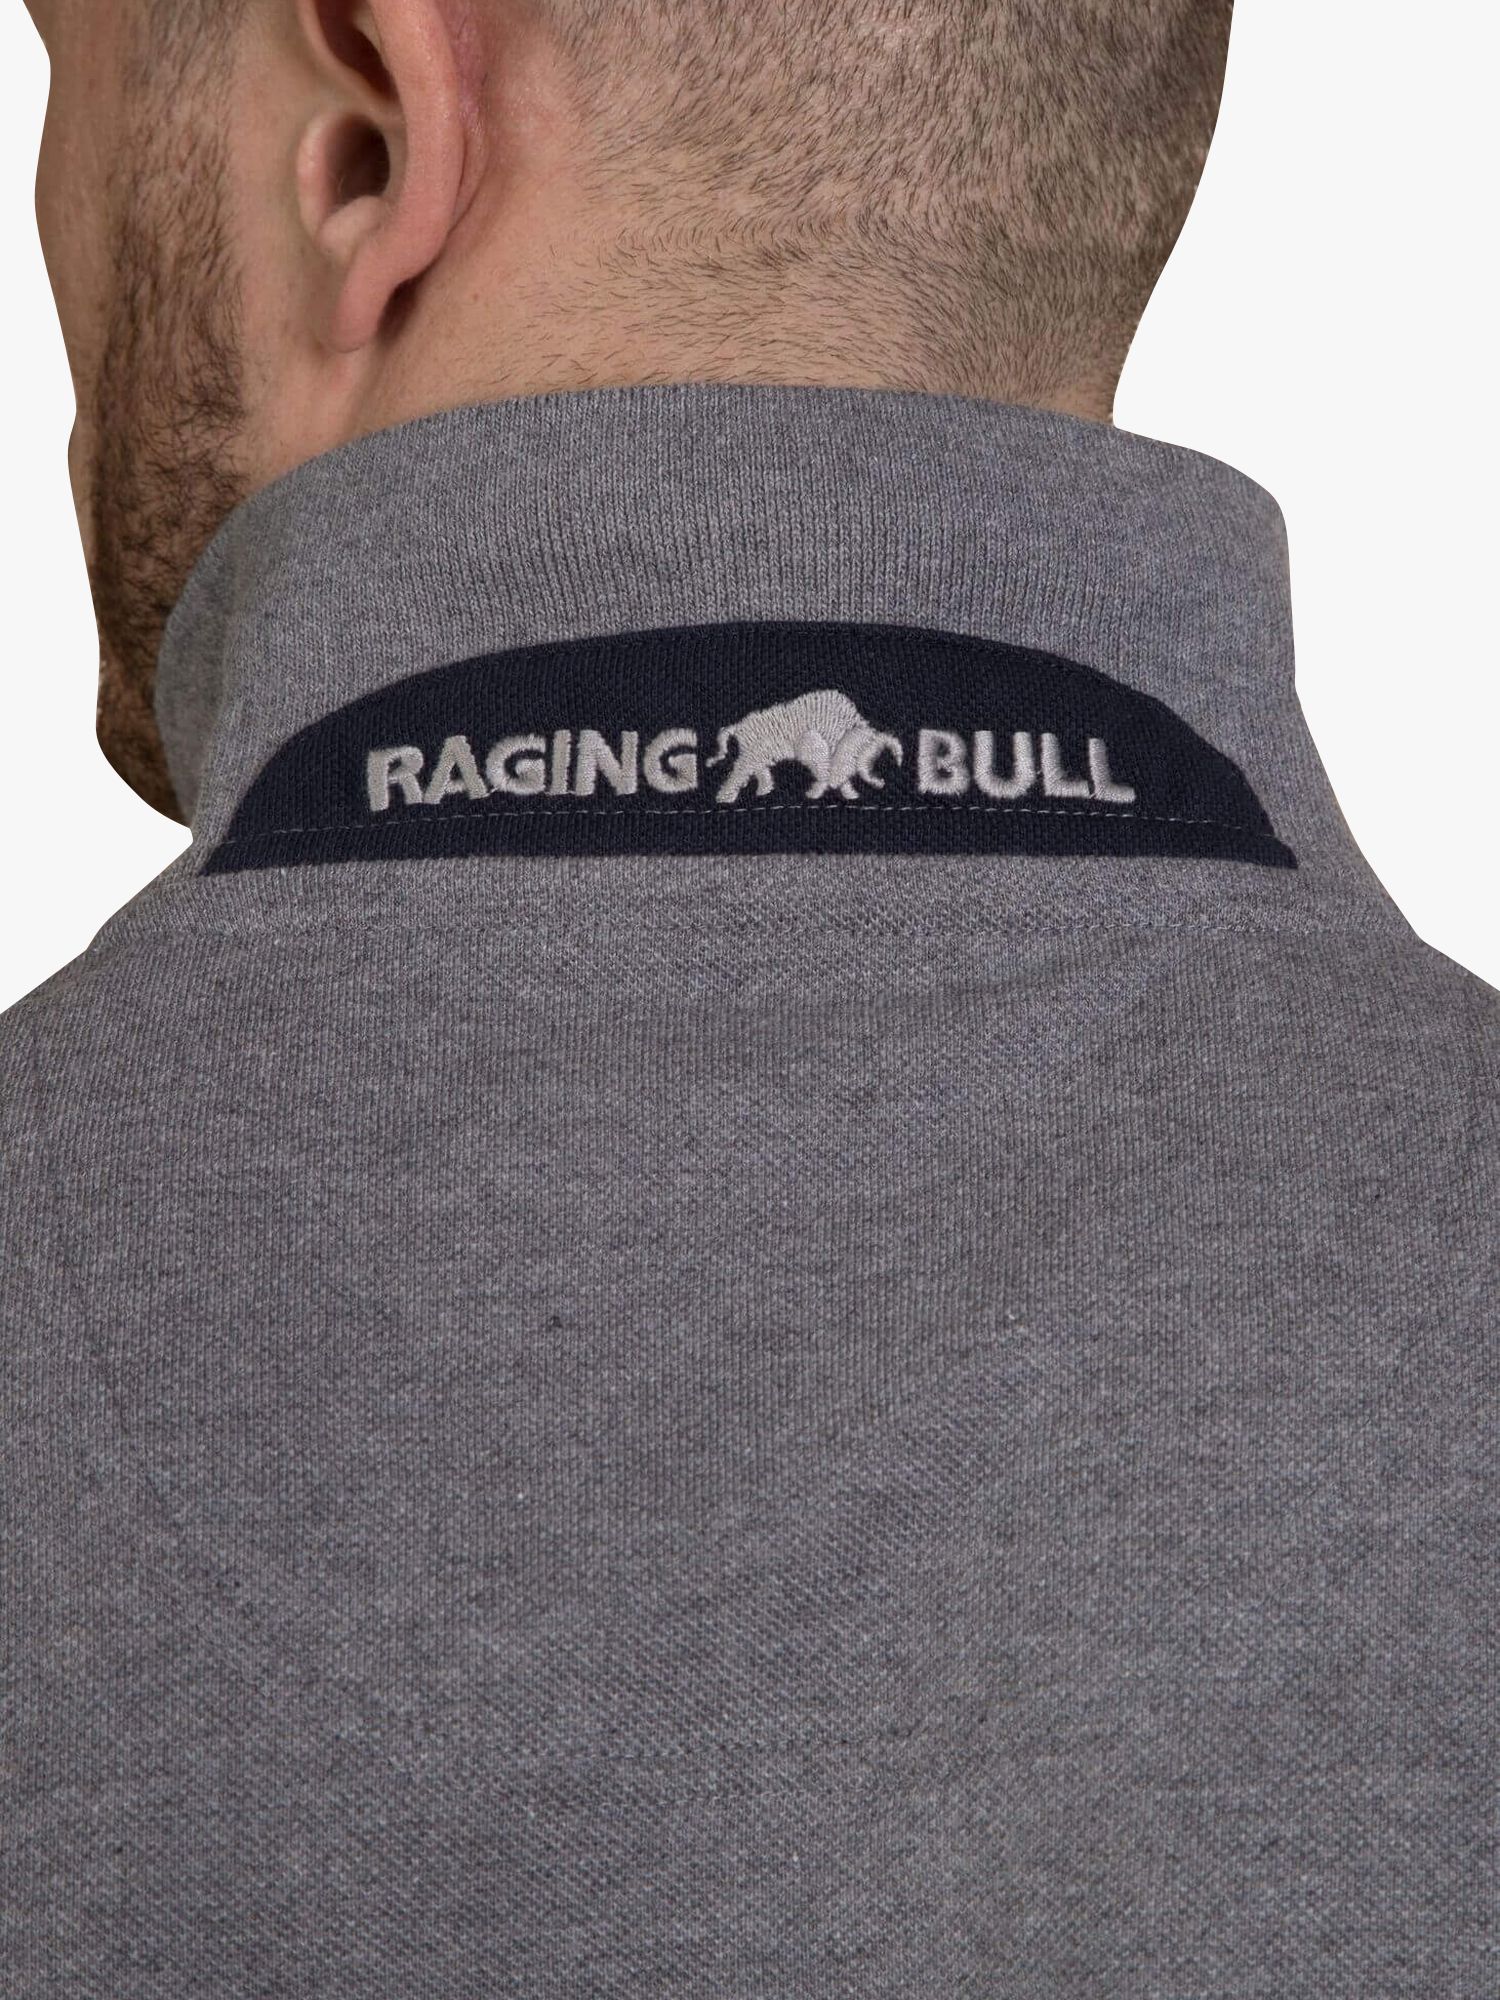 Raging Bull Classic Organic Cotton Pique Polo Shirt, Grey Marl, S